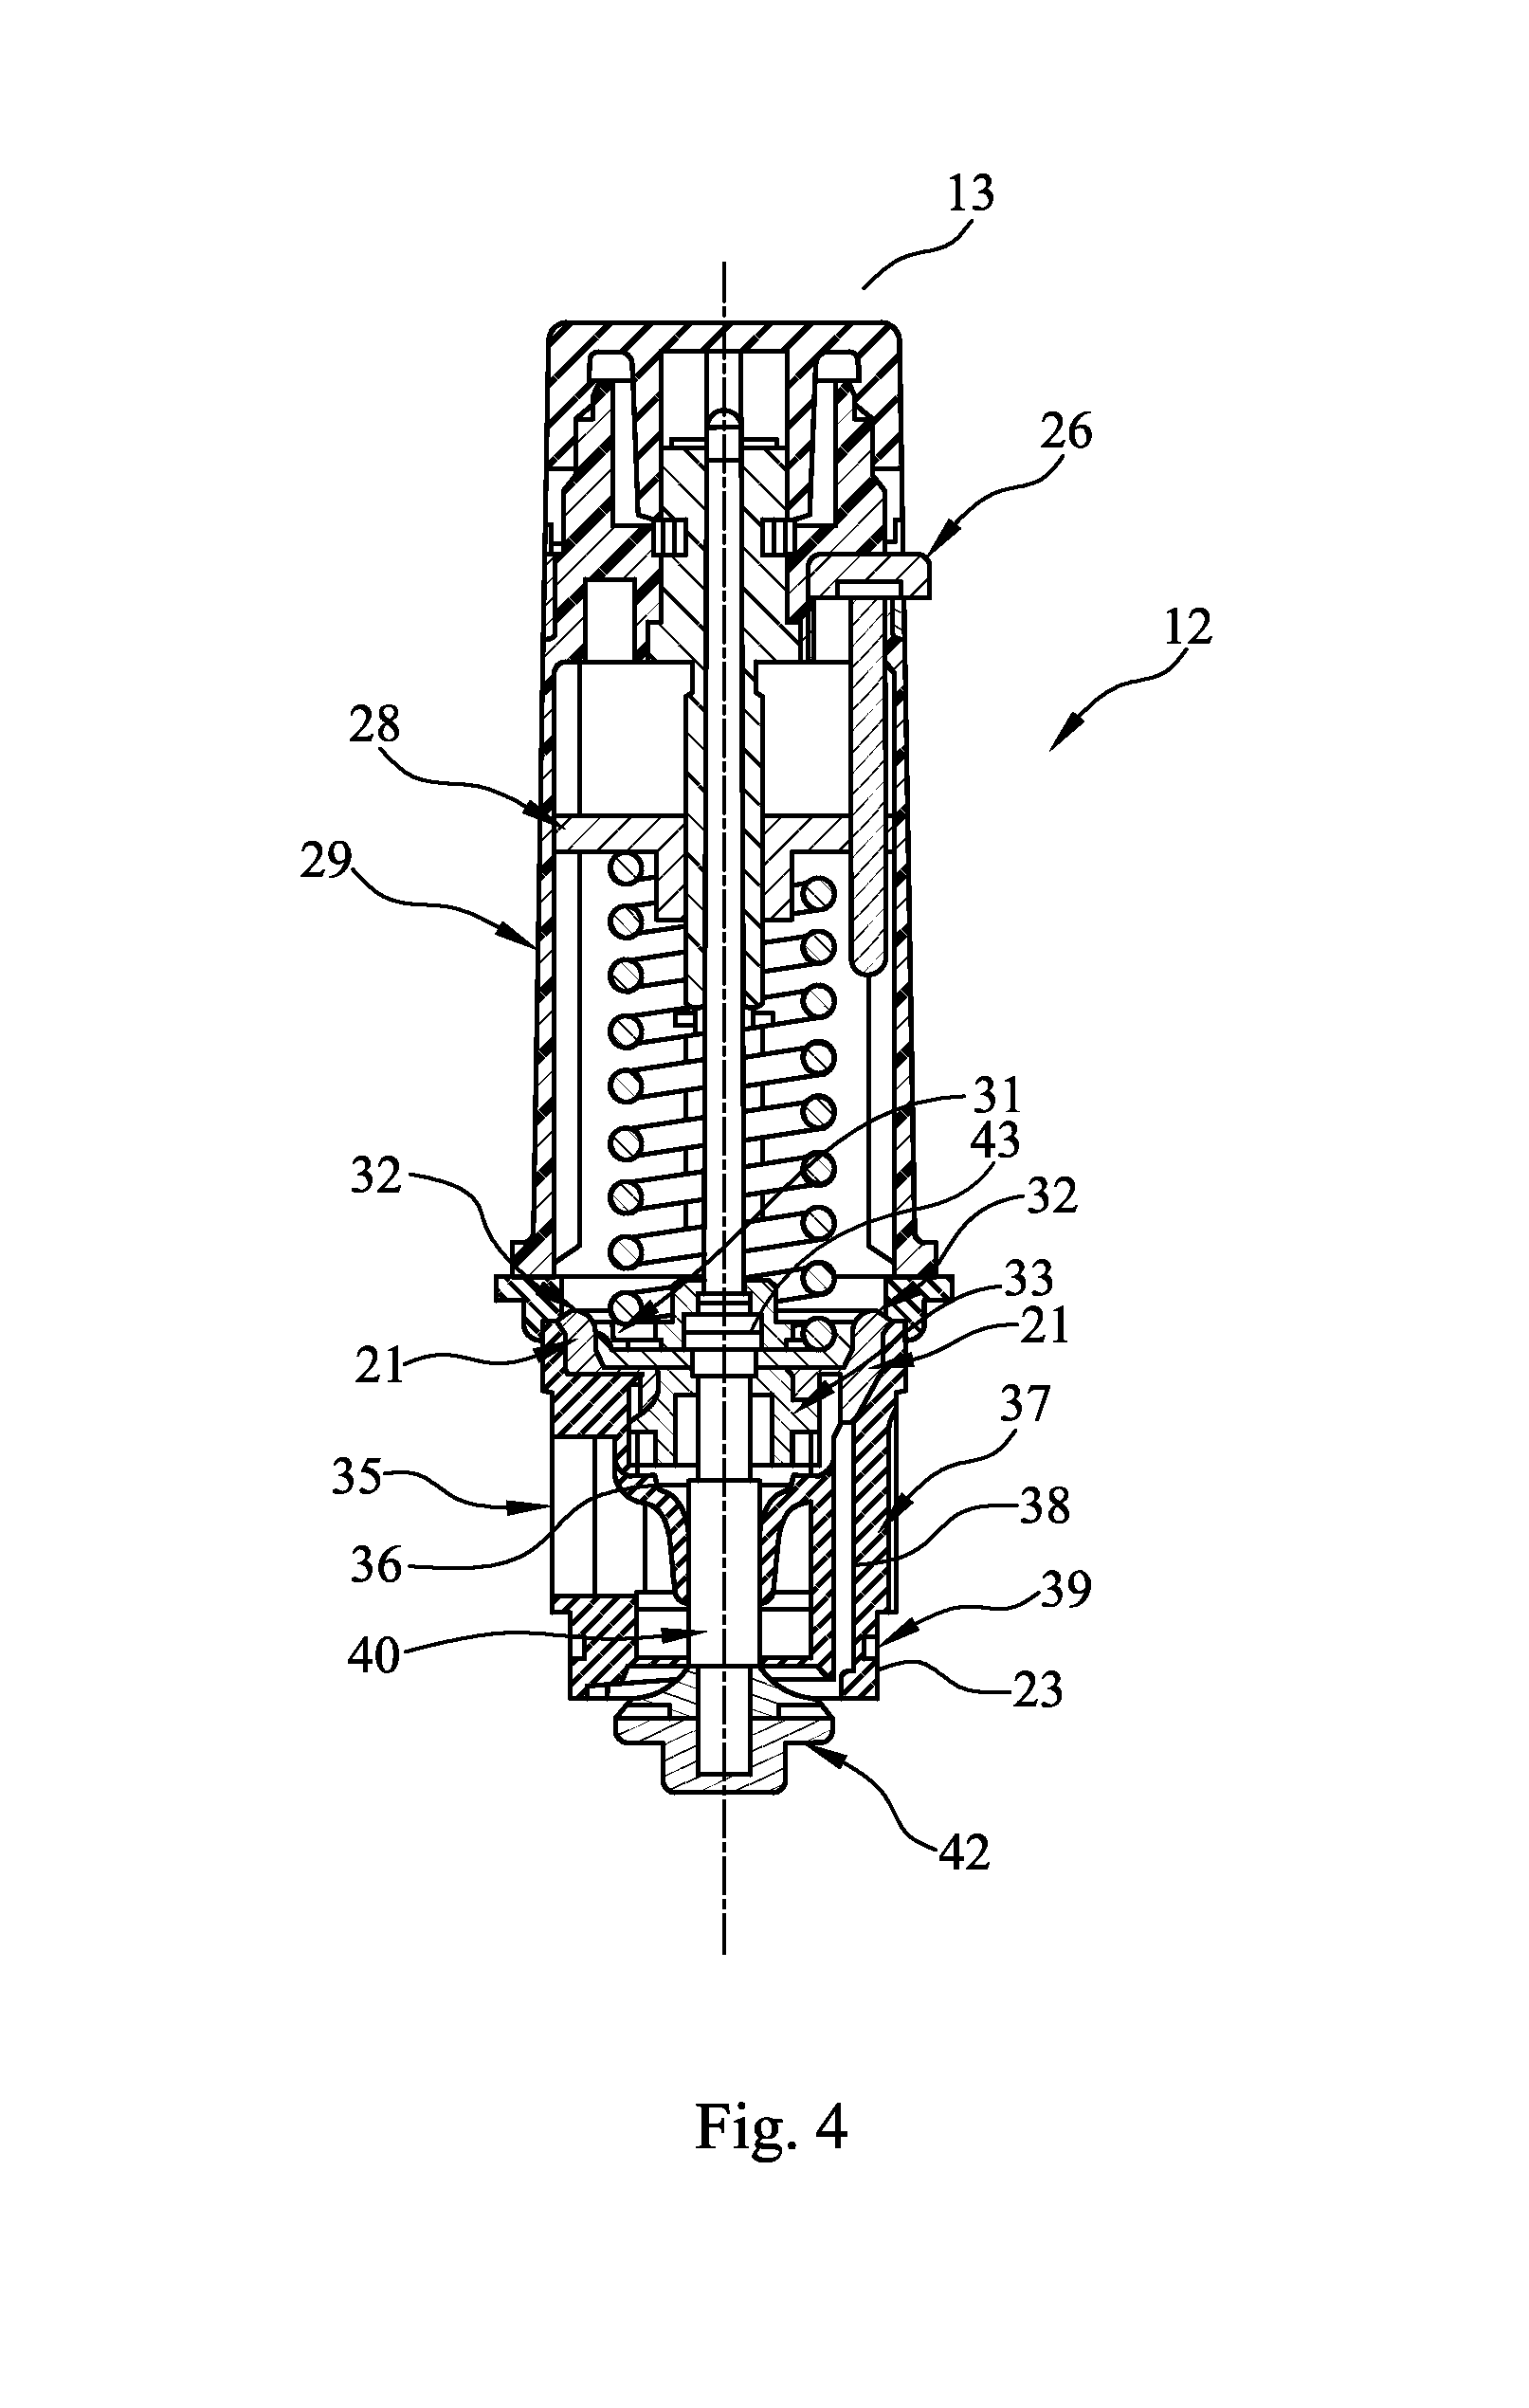 Multi-valve cartridge pressure regulator